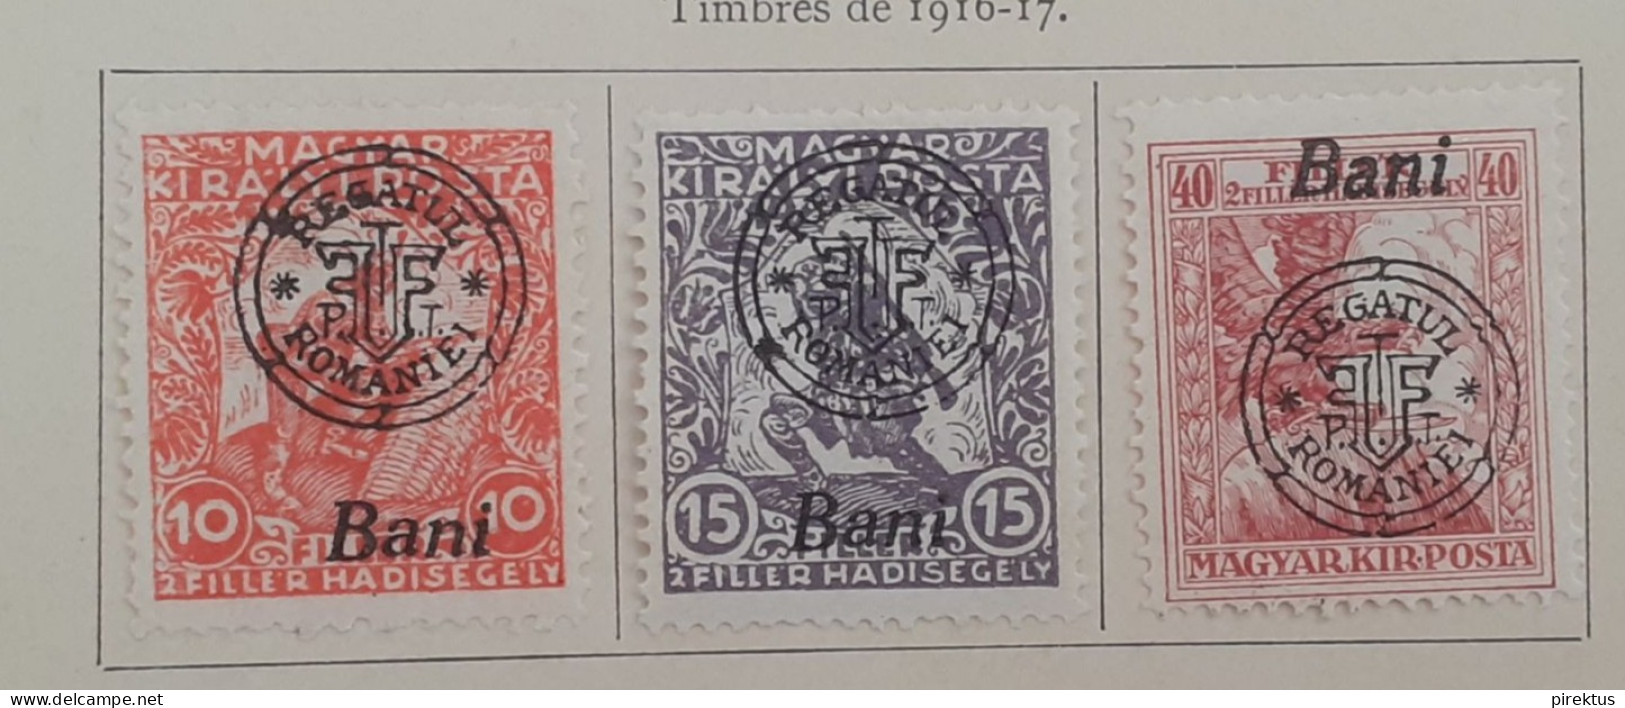 Romania 1913-1920 Stamps Lot - Transilvania